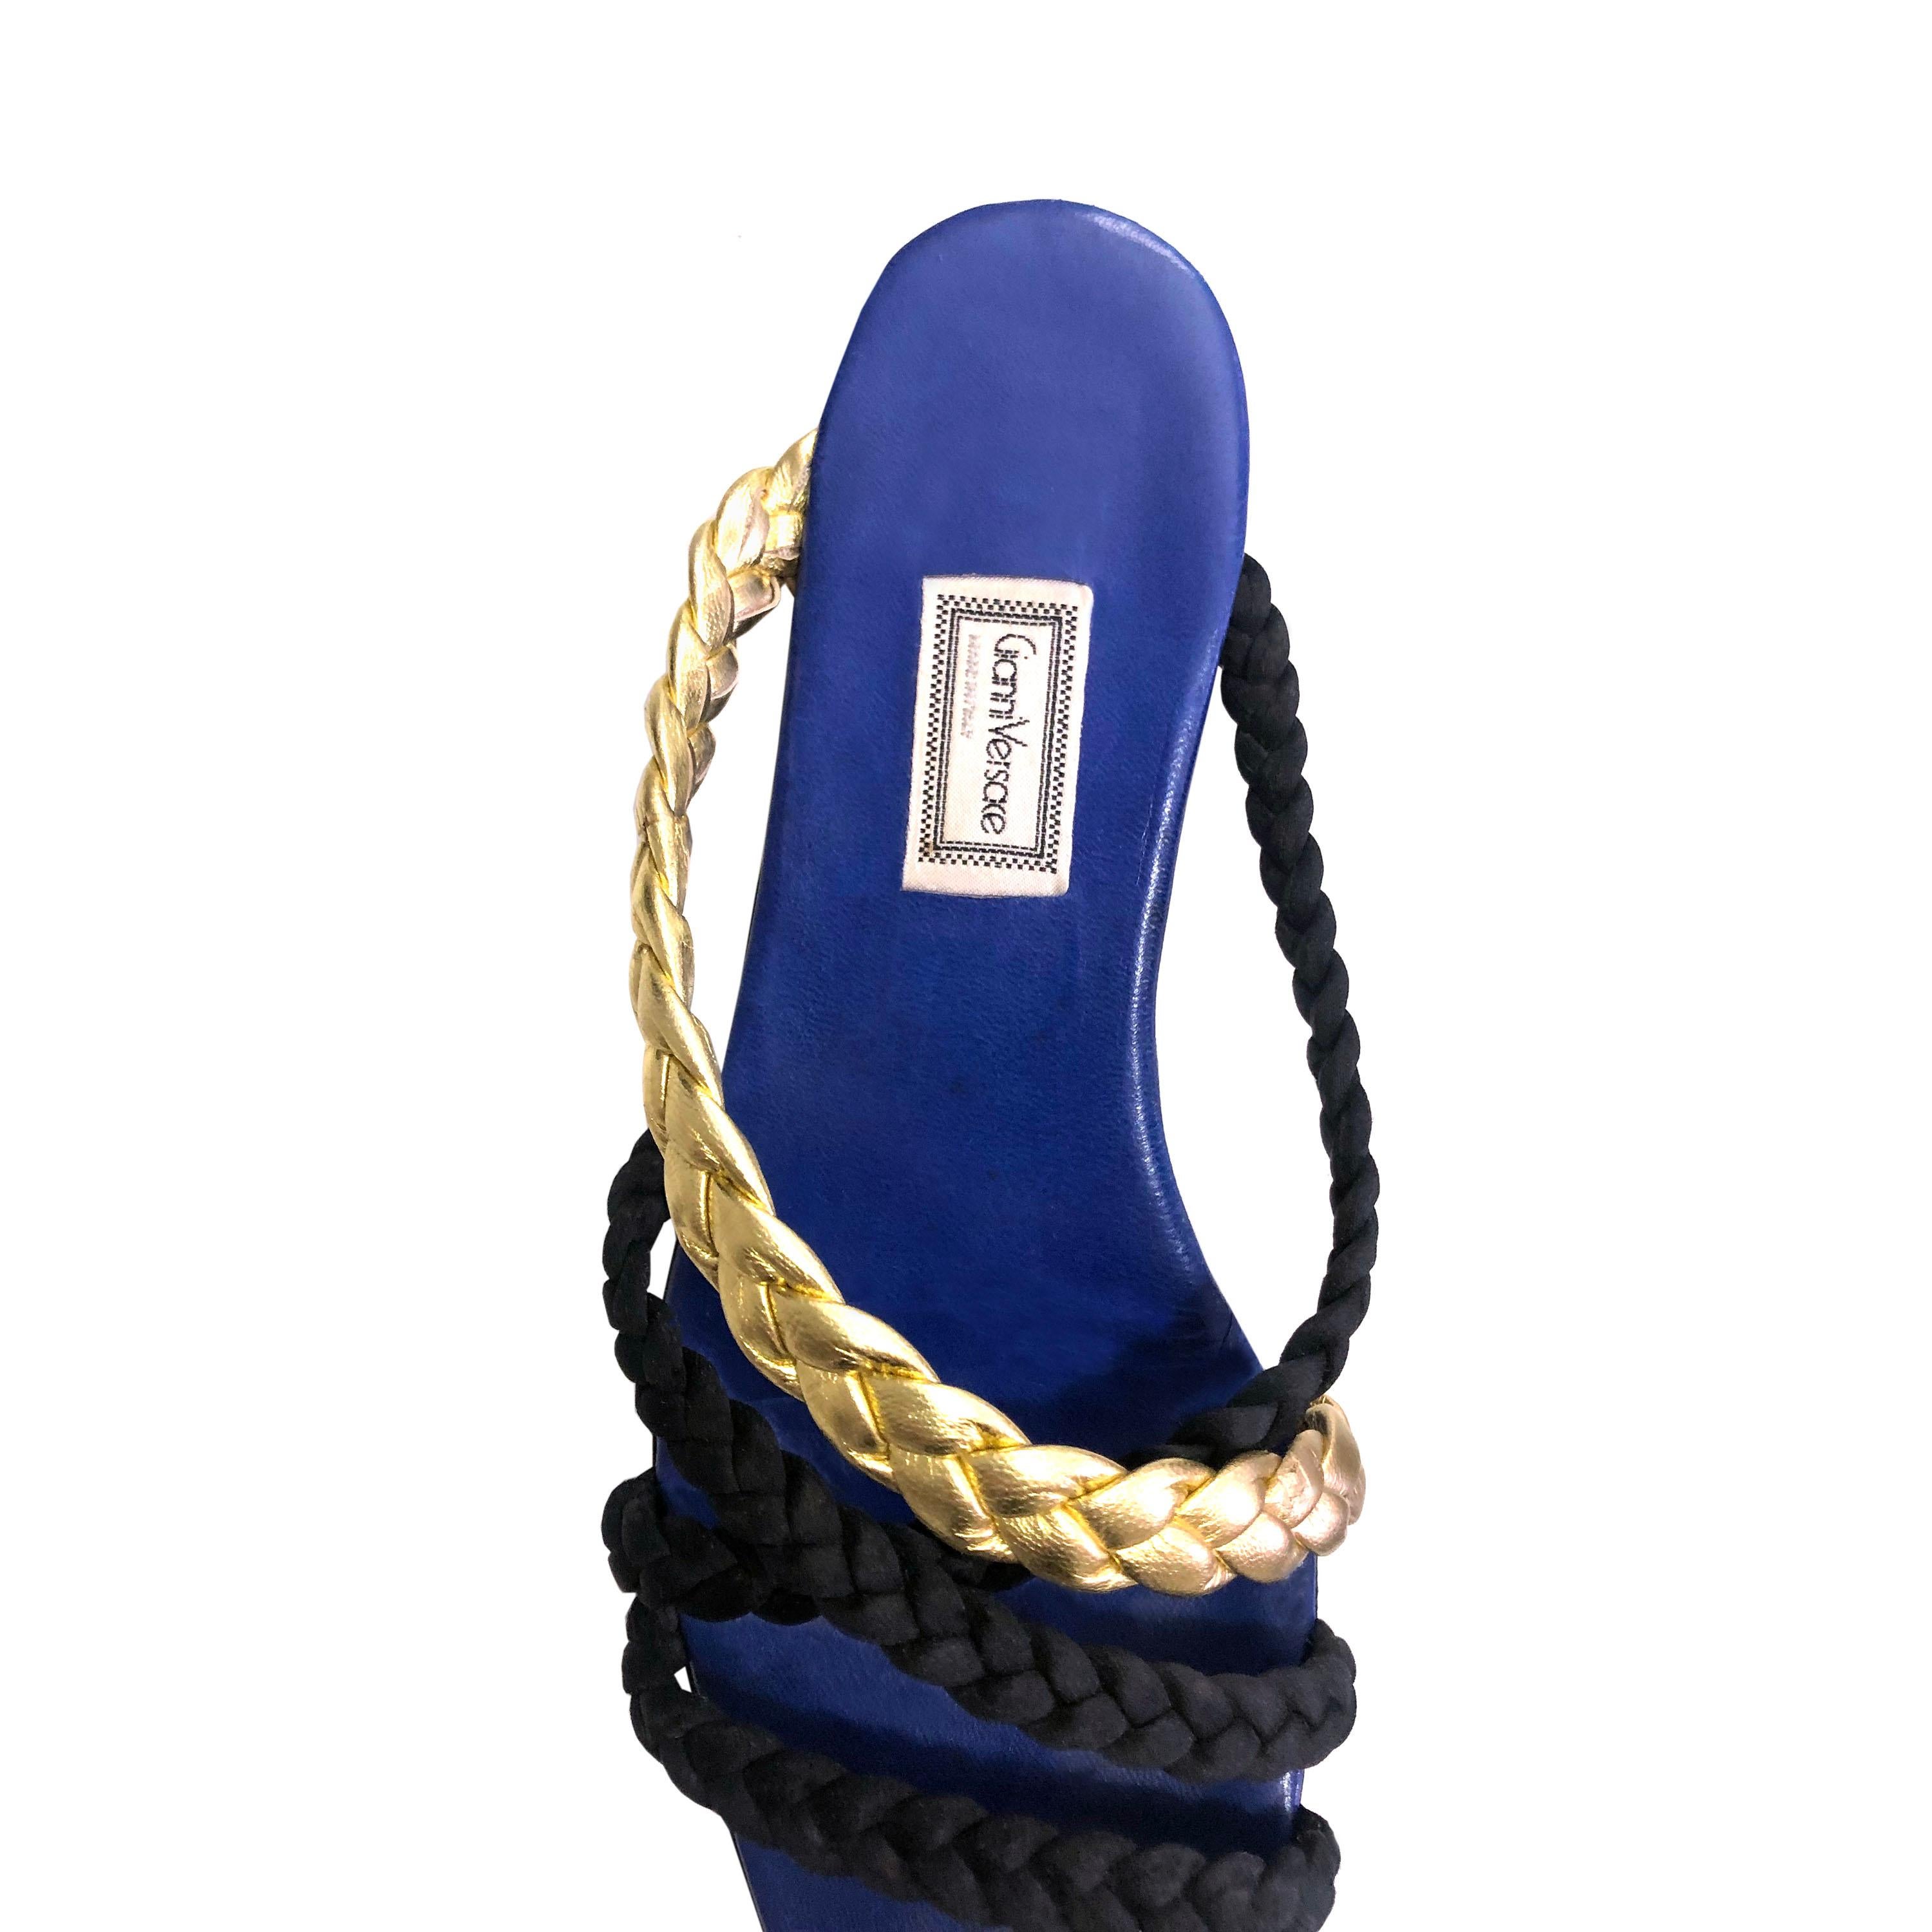 Gianni Versace Sandals - 1980s Vintage - Gold Leather Plaited Straps - EU 37.5 For Sale 1